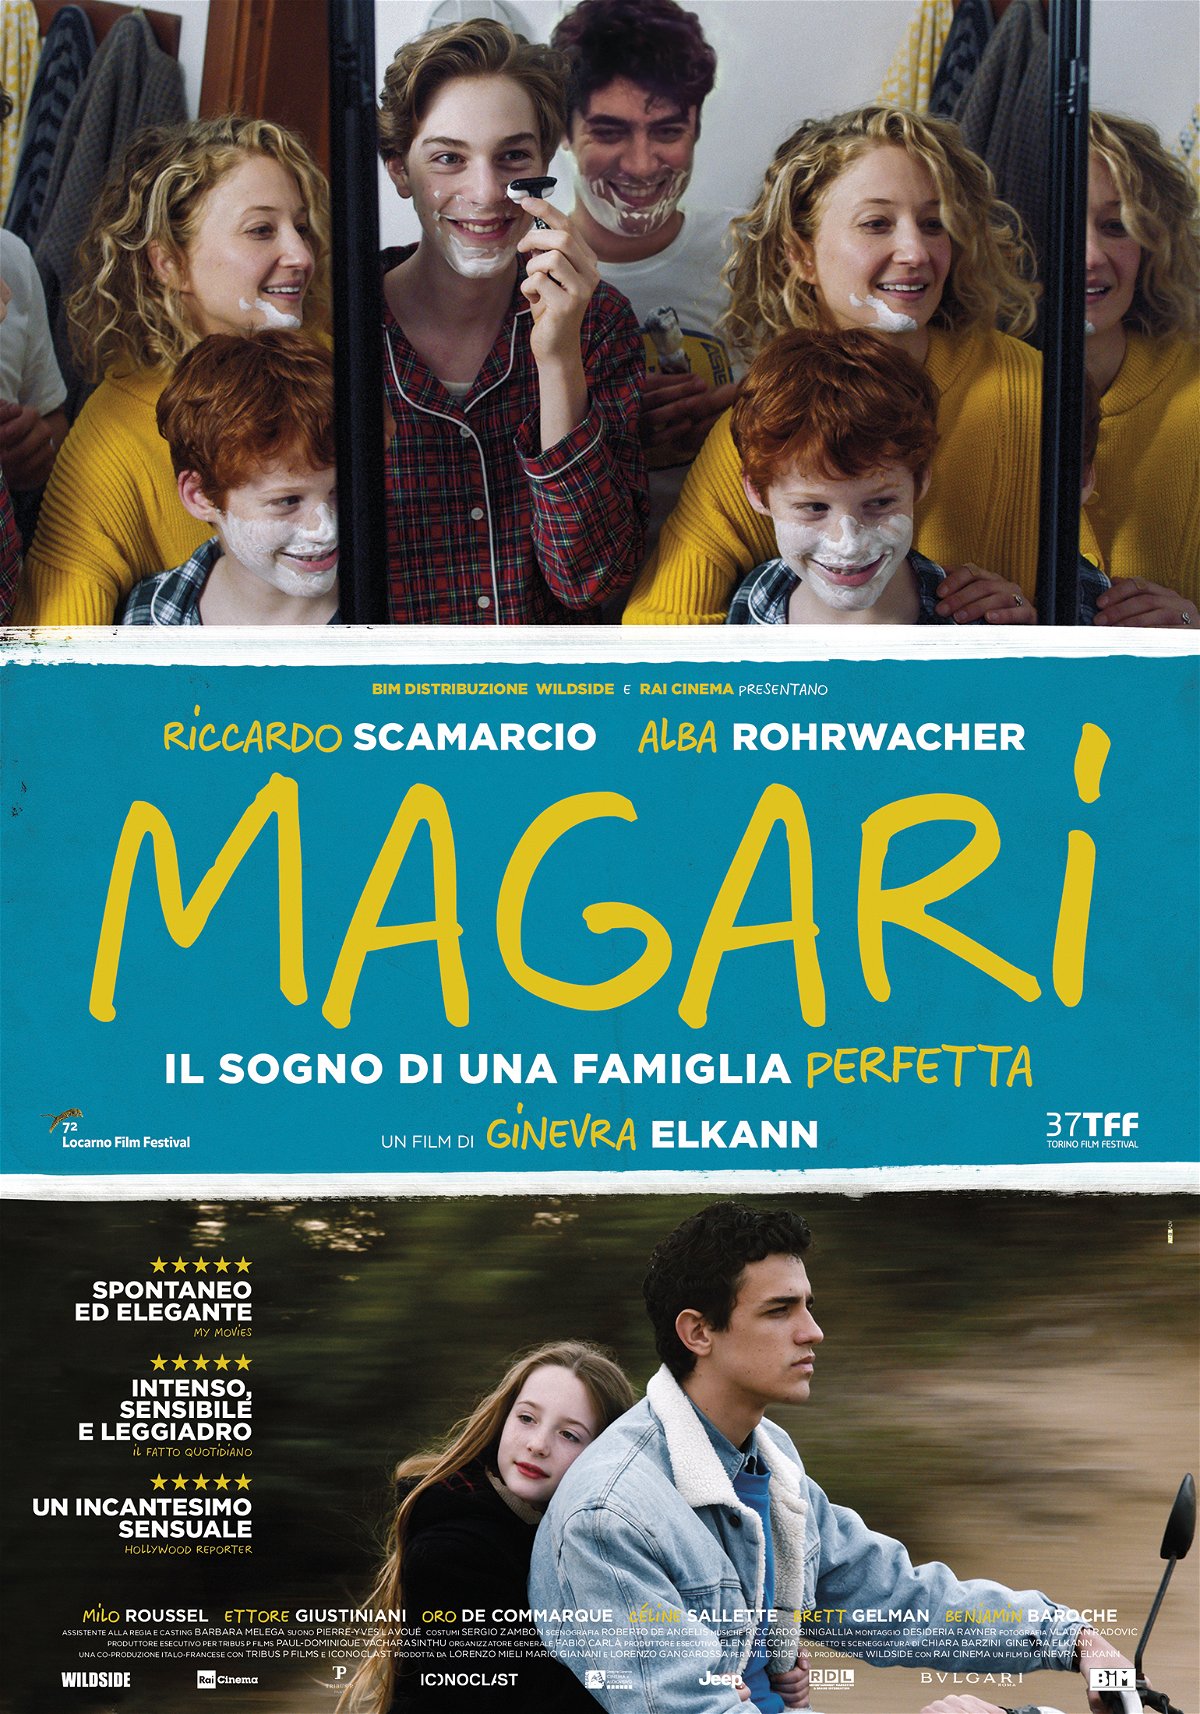 Magari - poster del film di Ginevra Elkann